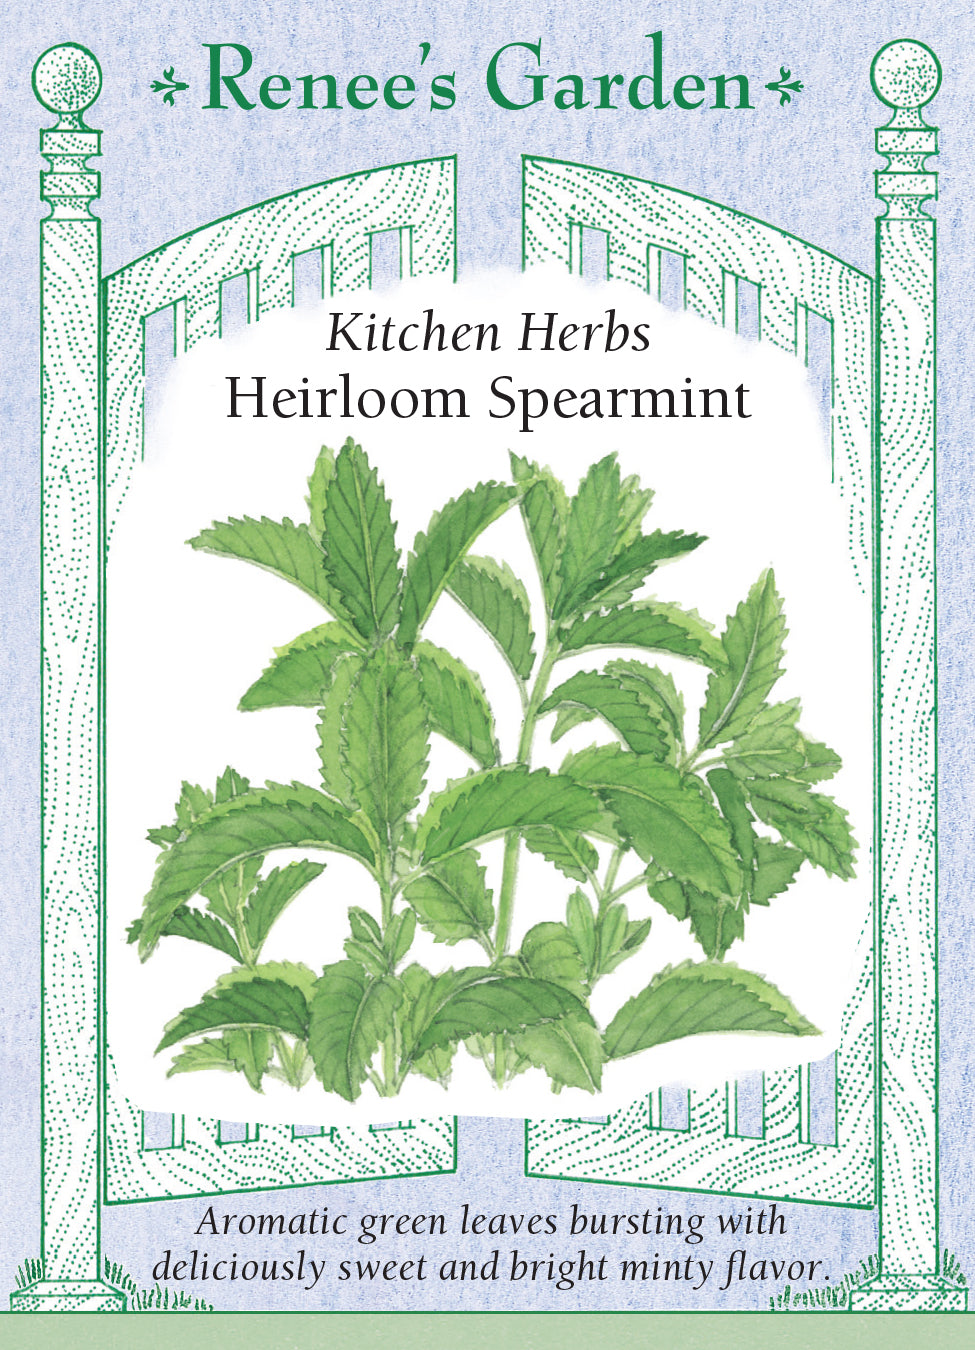 Heirloom Spearmint